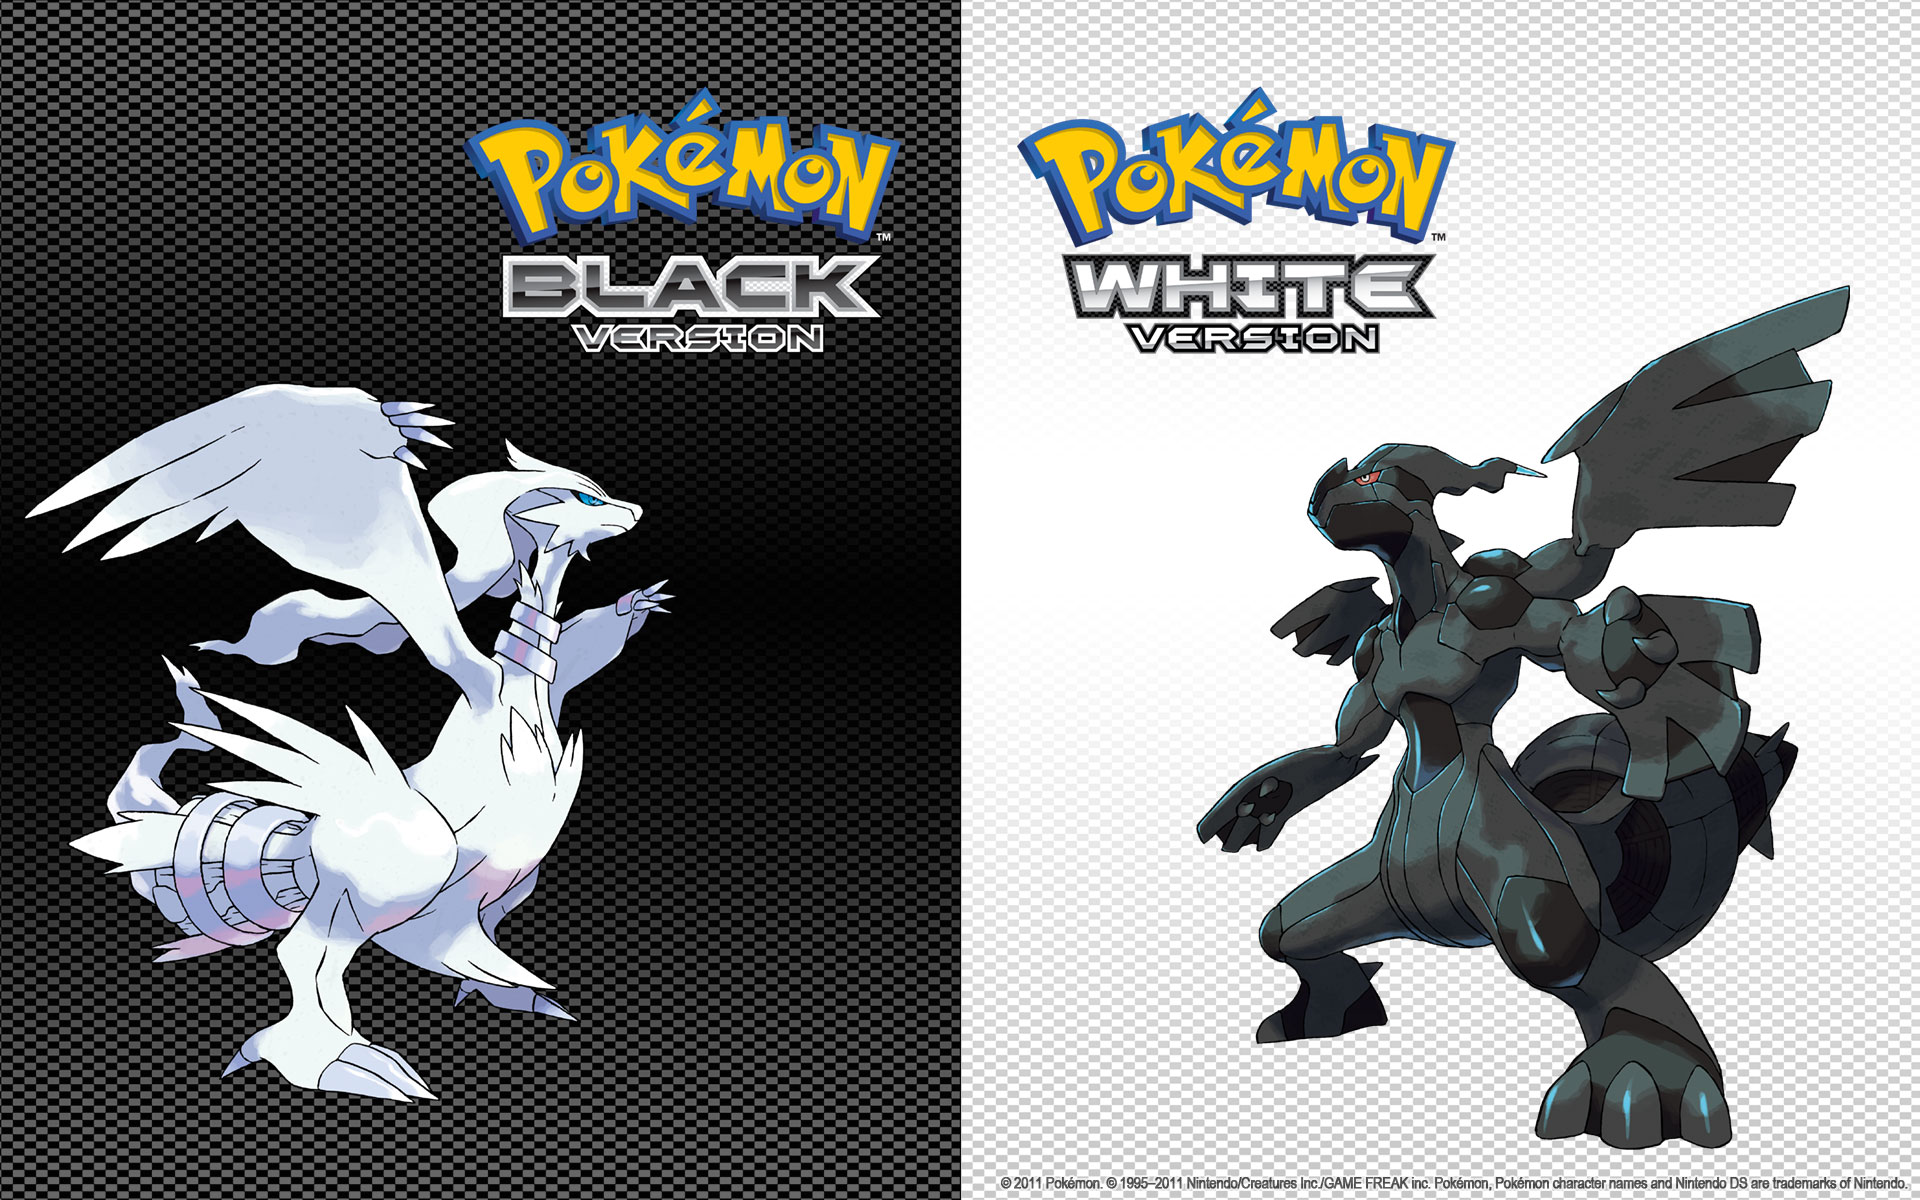 08 - Pokémon Black & White PT-BR - Xpace Games 